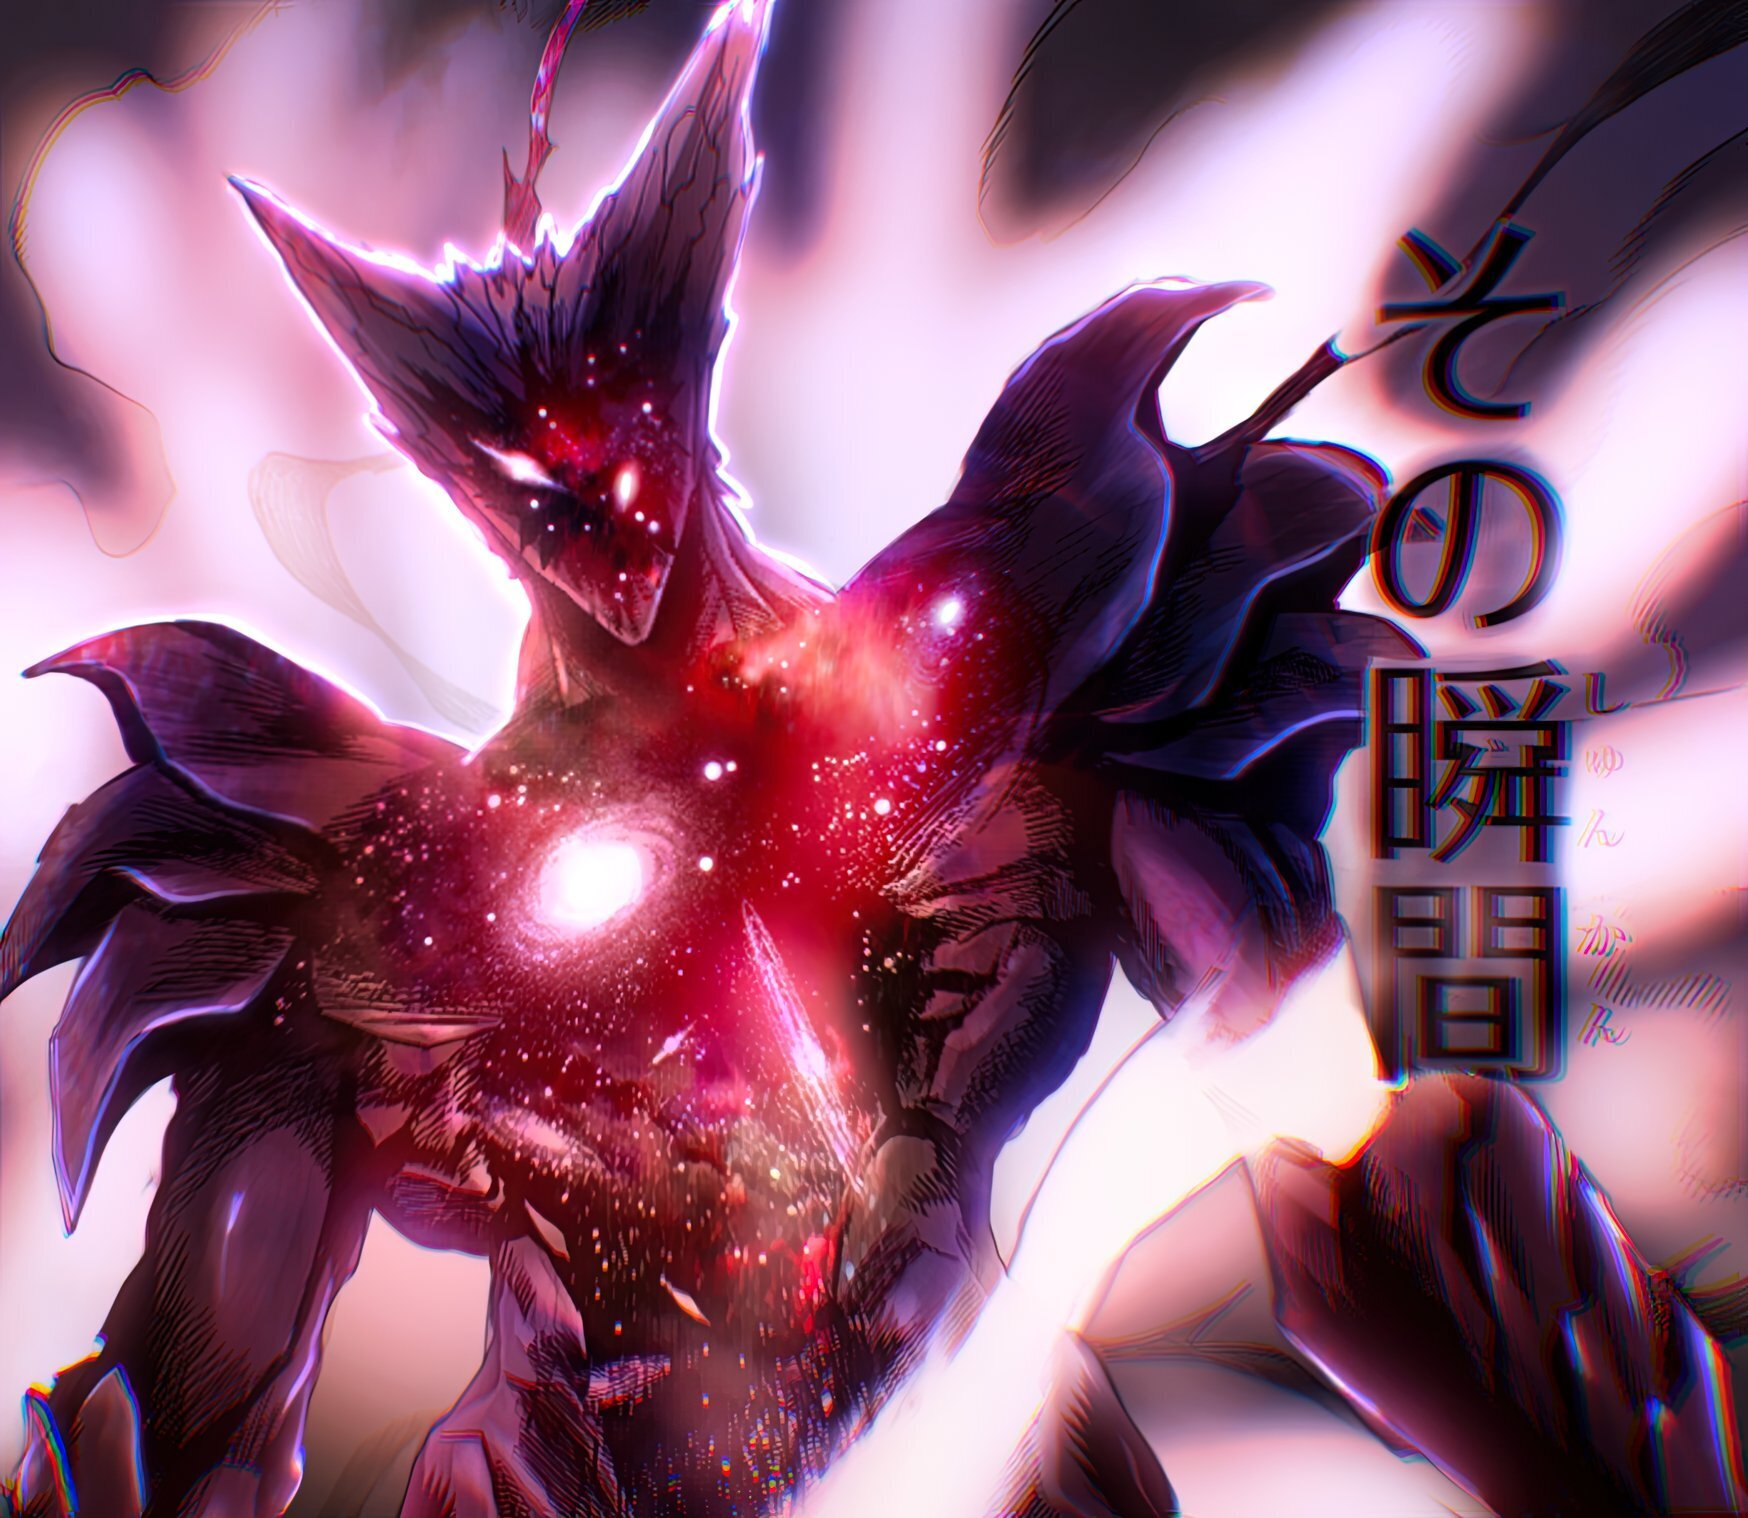 Cosmic Fear Garou vs. Saitama: Who Would Win in a Fight?